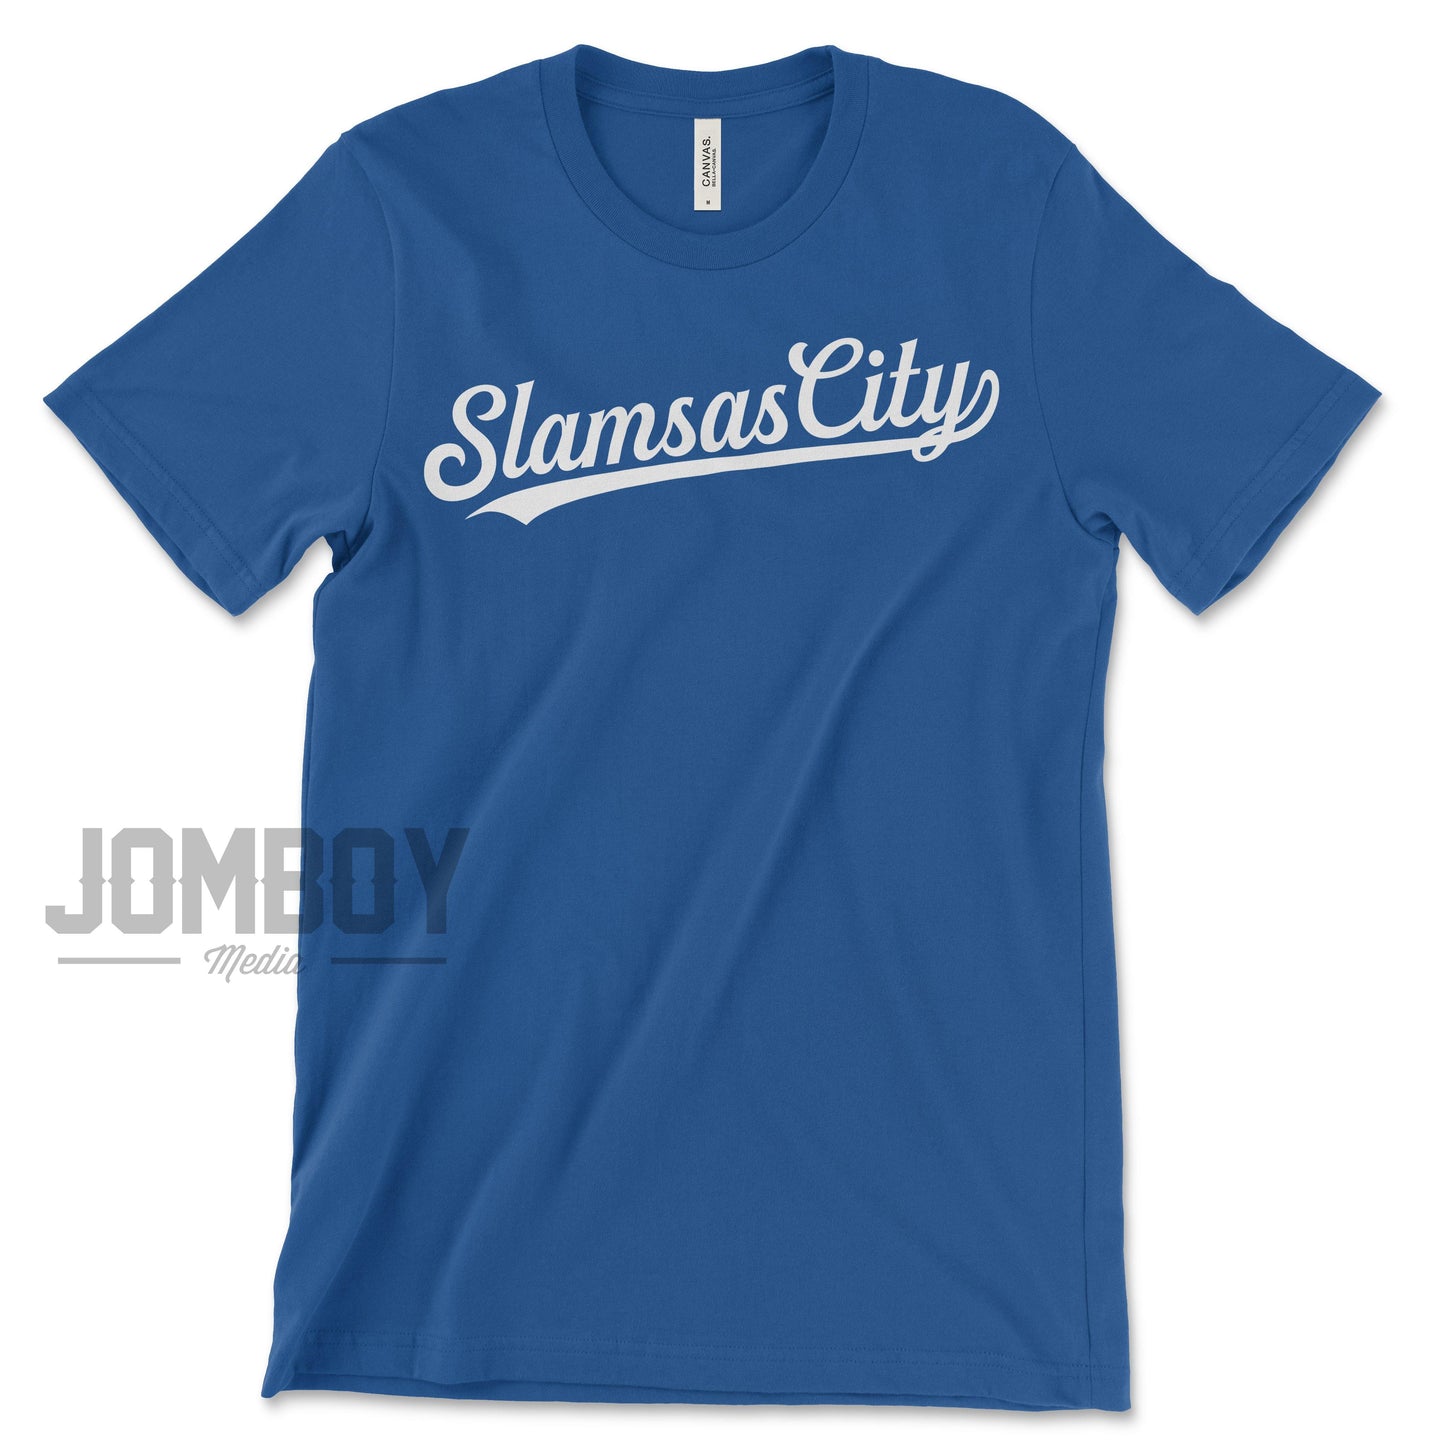 Slamsas City | T-Shirt - Jomboy Media